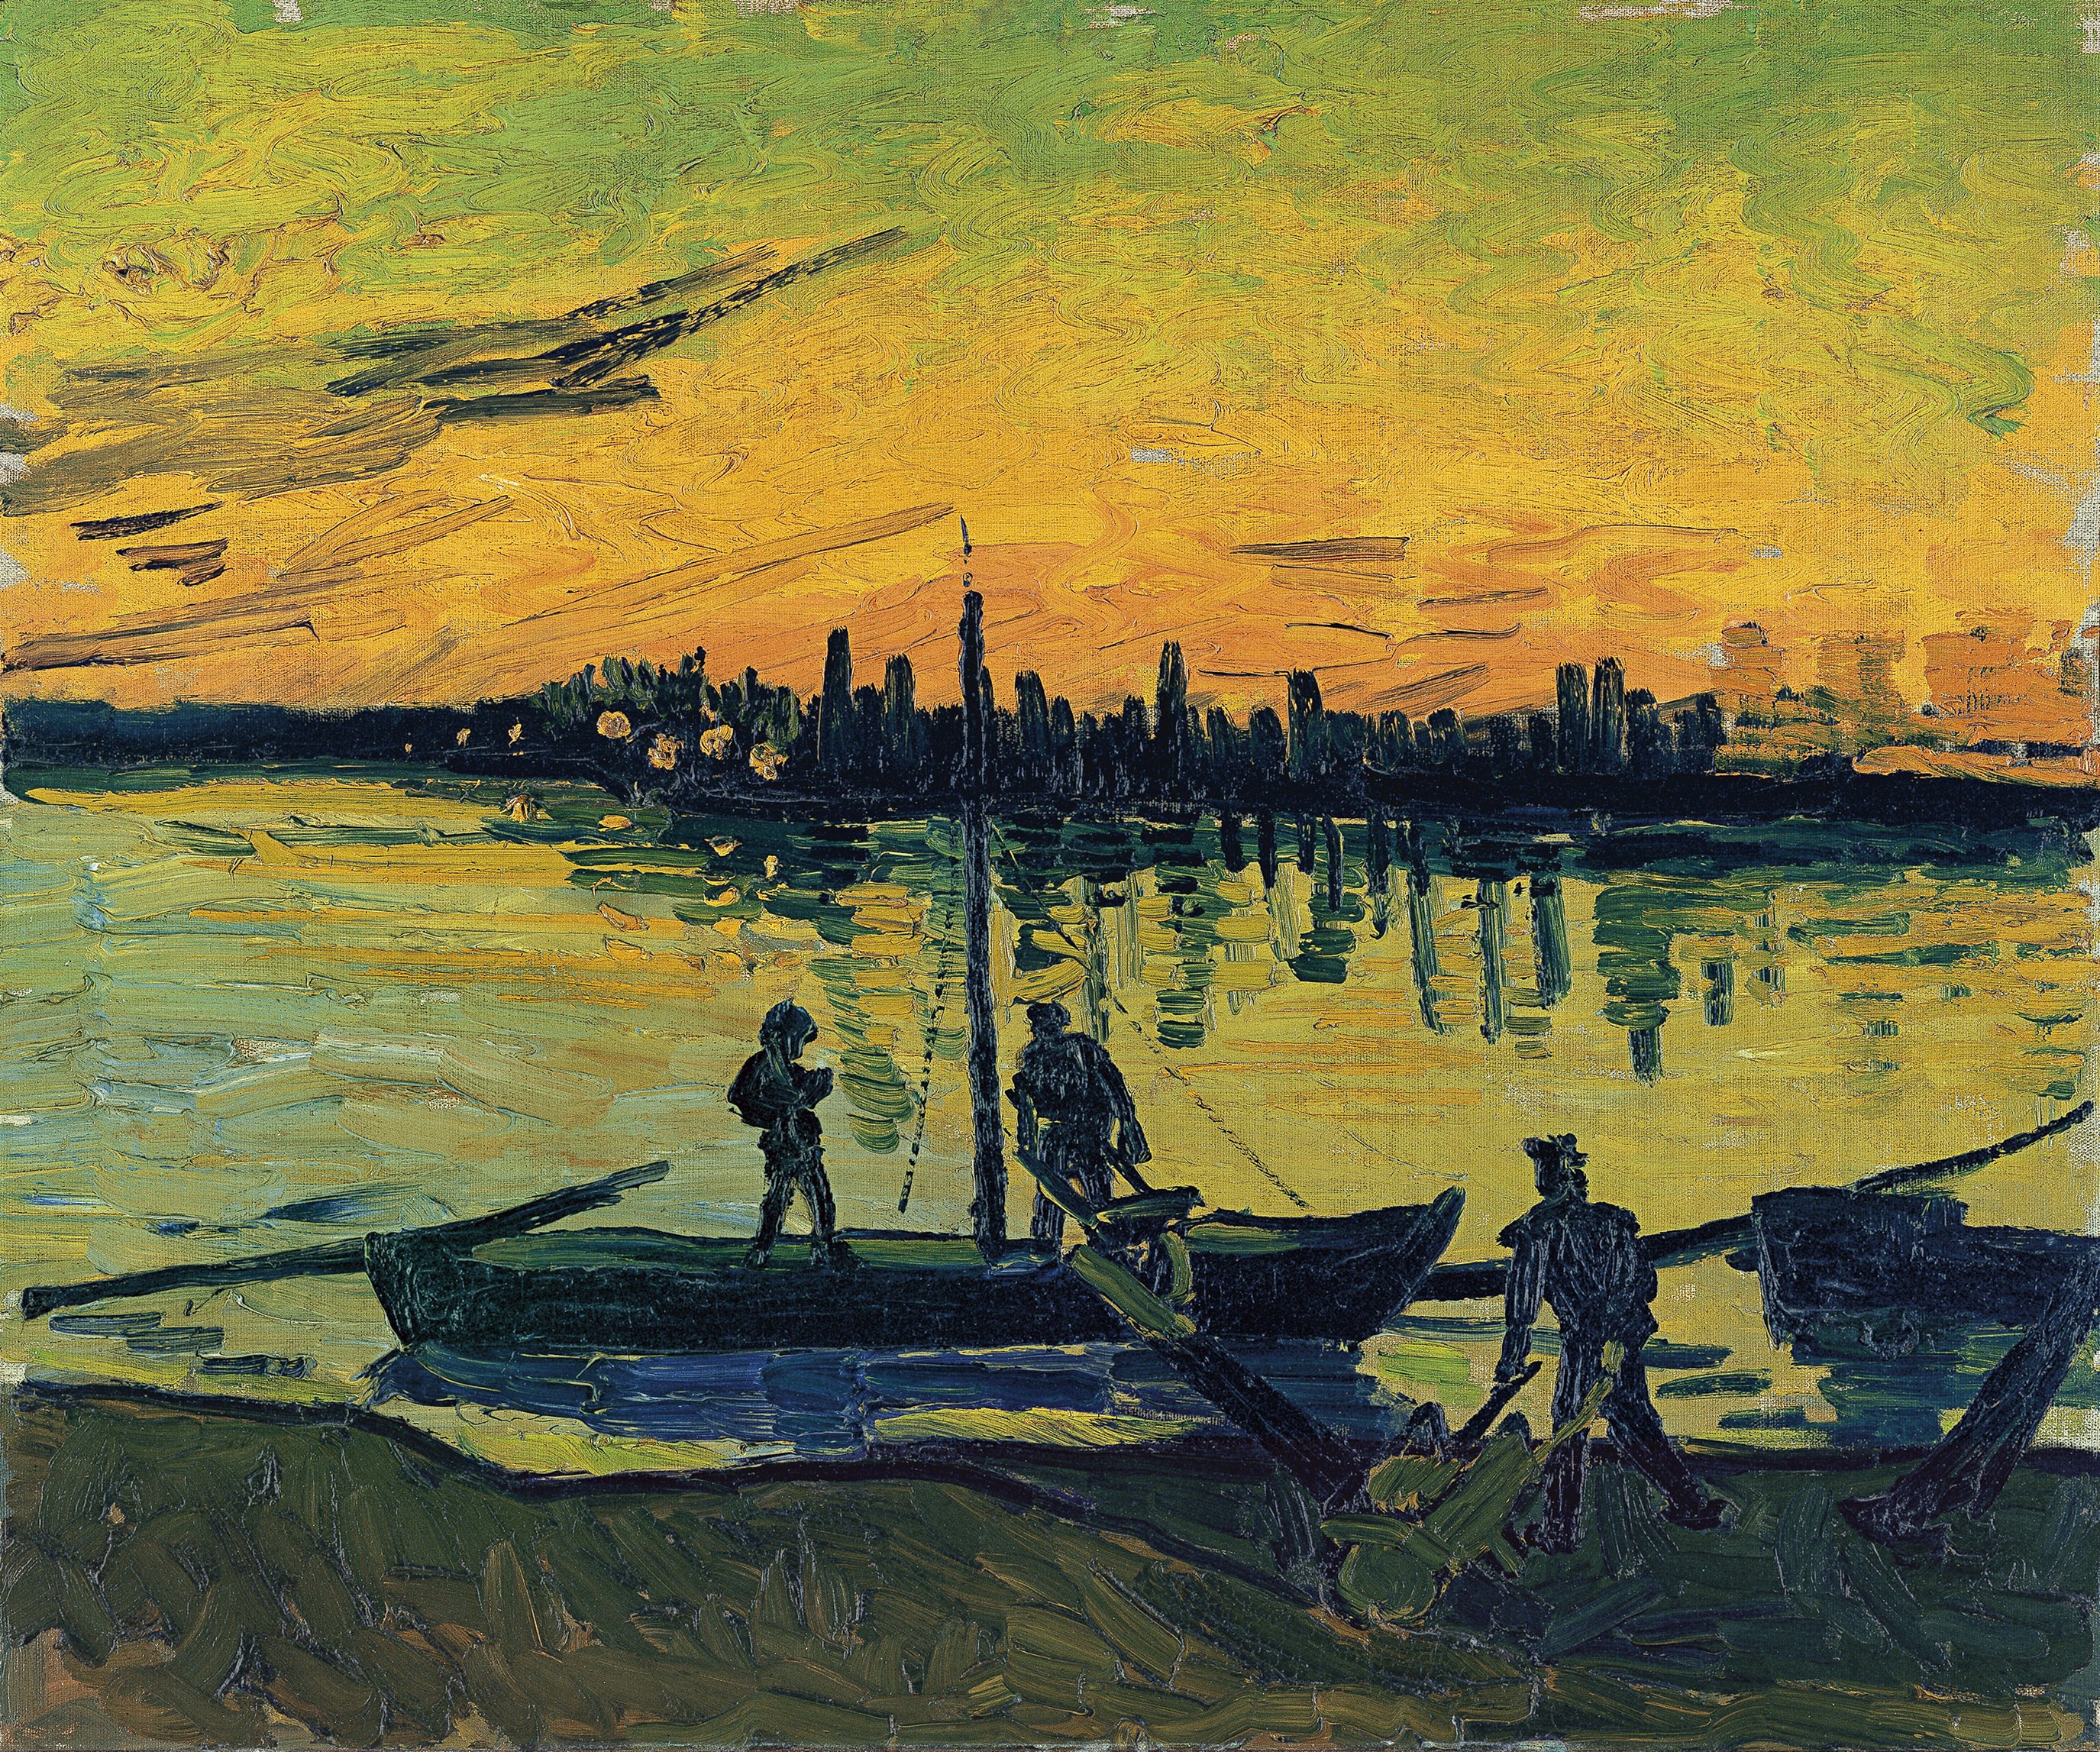 The Stevedores in Arles by Vincent van Gogh - 1888 - 54 x 65 cm Museo Nacional Thyssen-Bornemisza